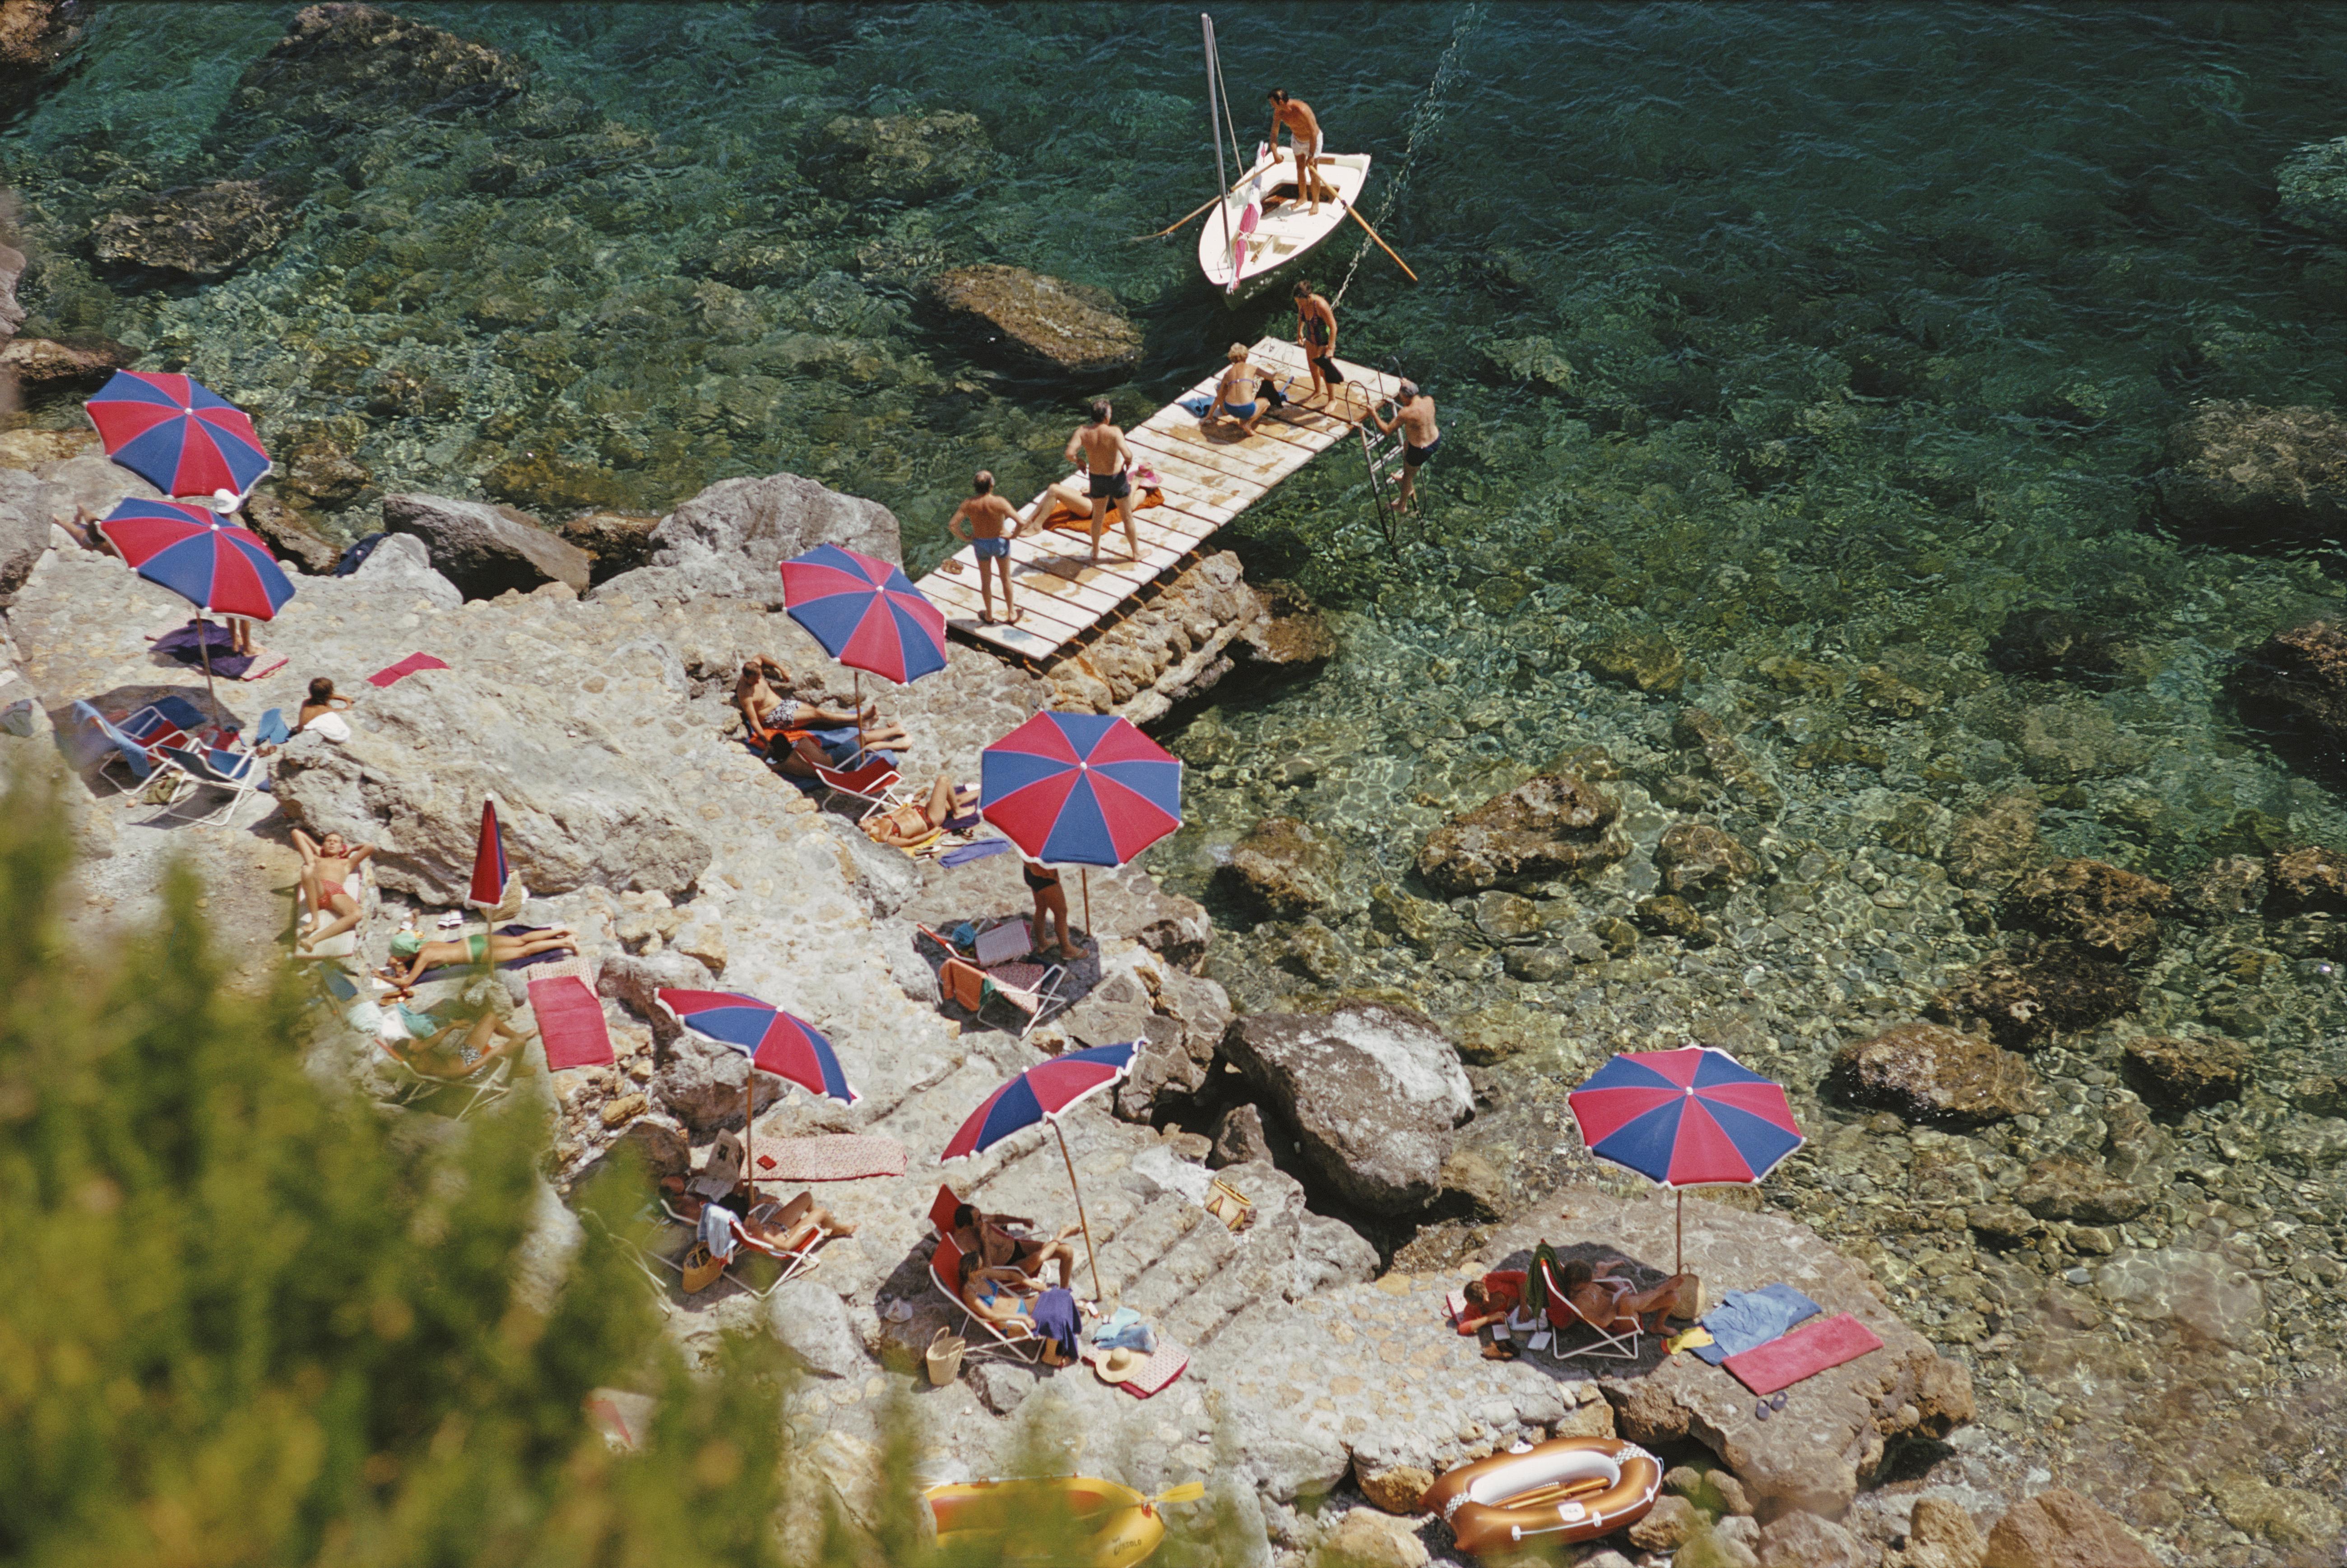 Slim Aarons Figurative Photograph - Il Pellicano Beach Porto Ercole, Italy (Red, Blue, Turquoise, Green)